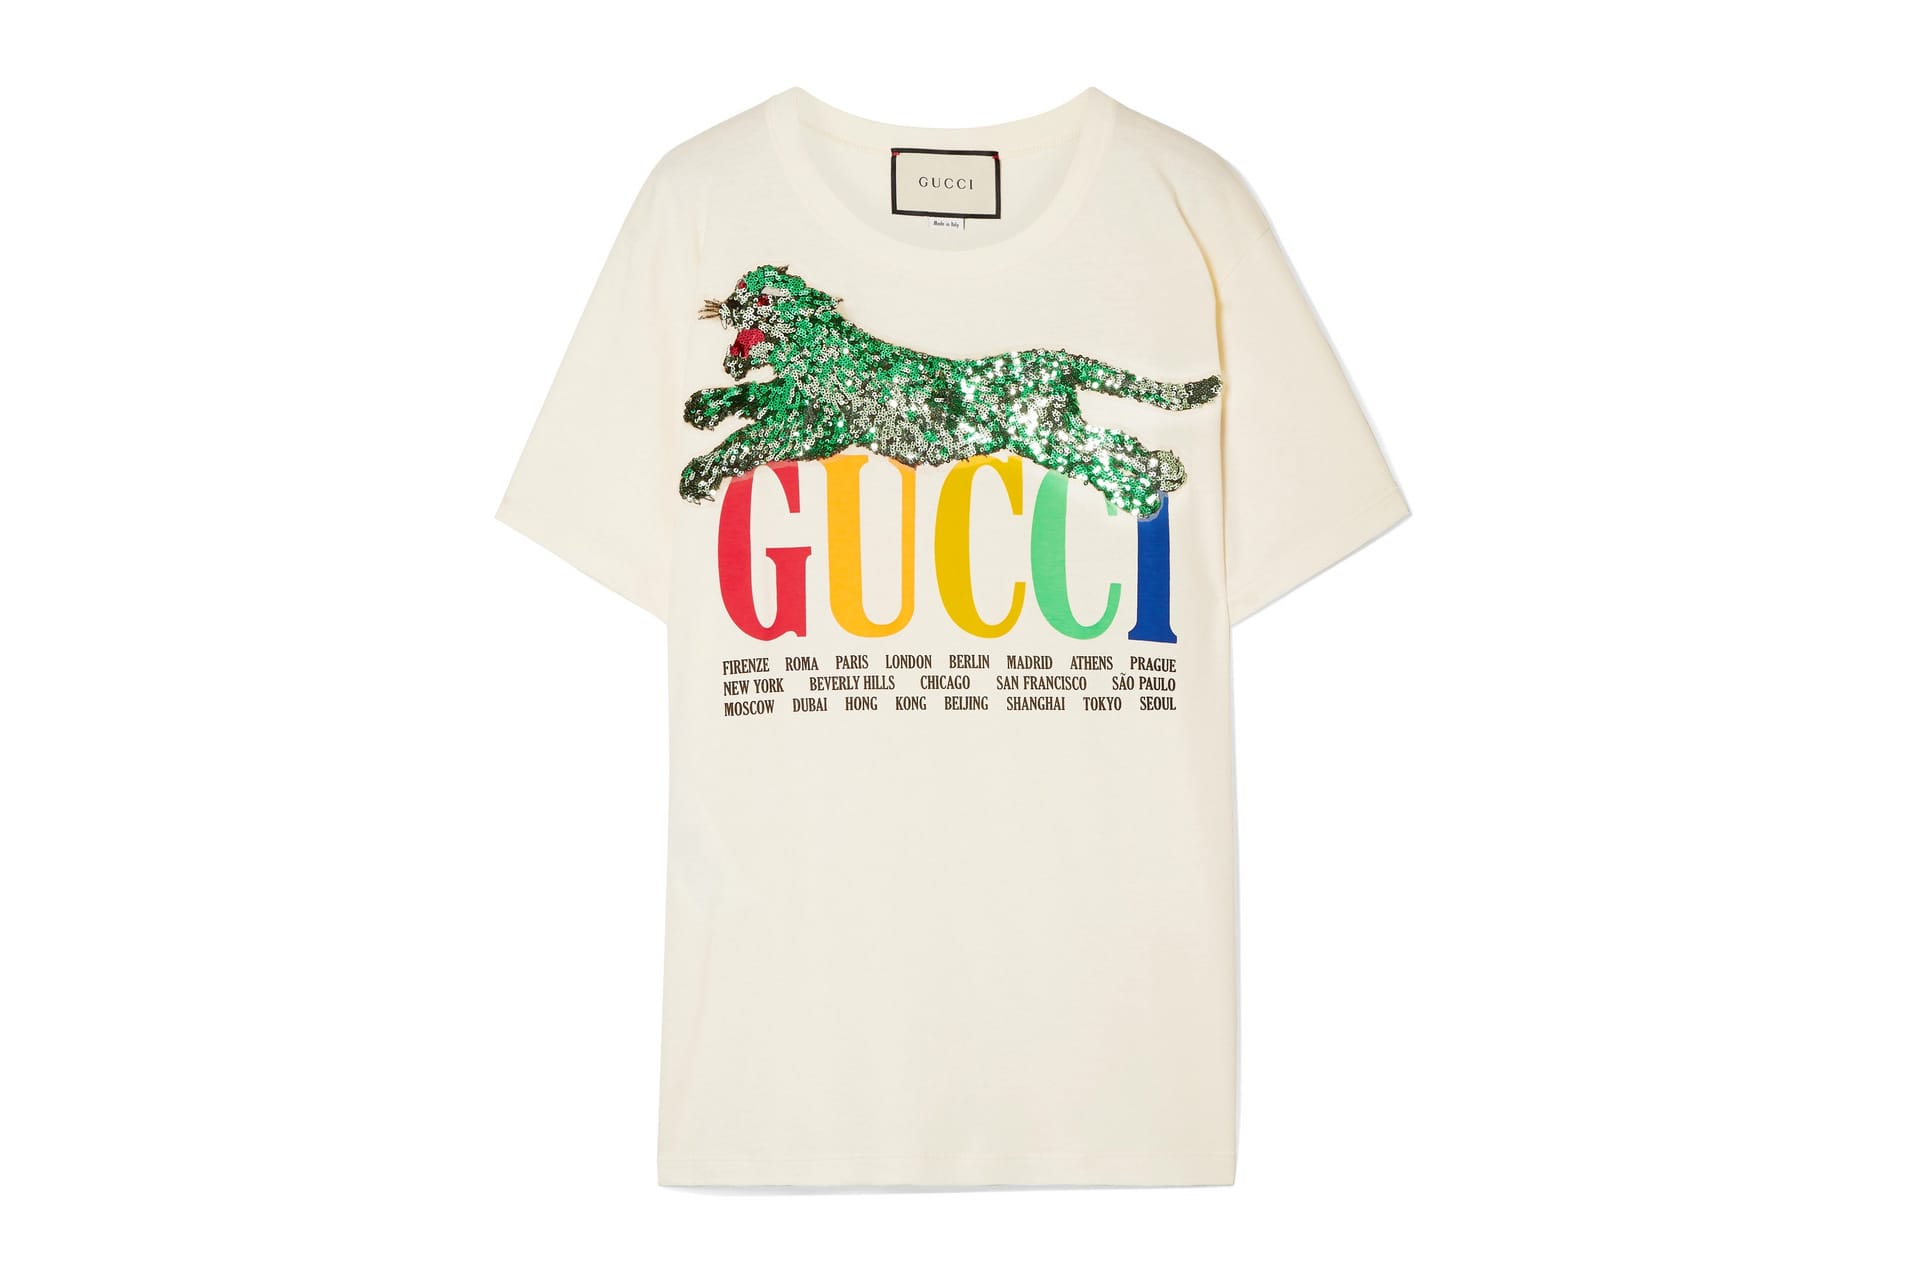 gucci shirt rainbow